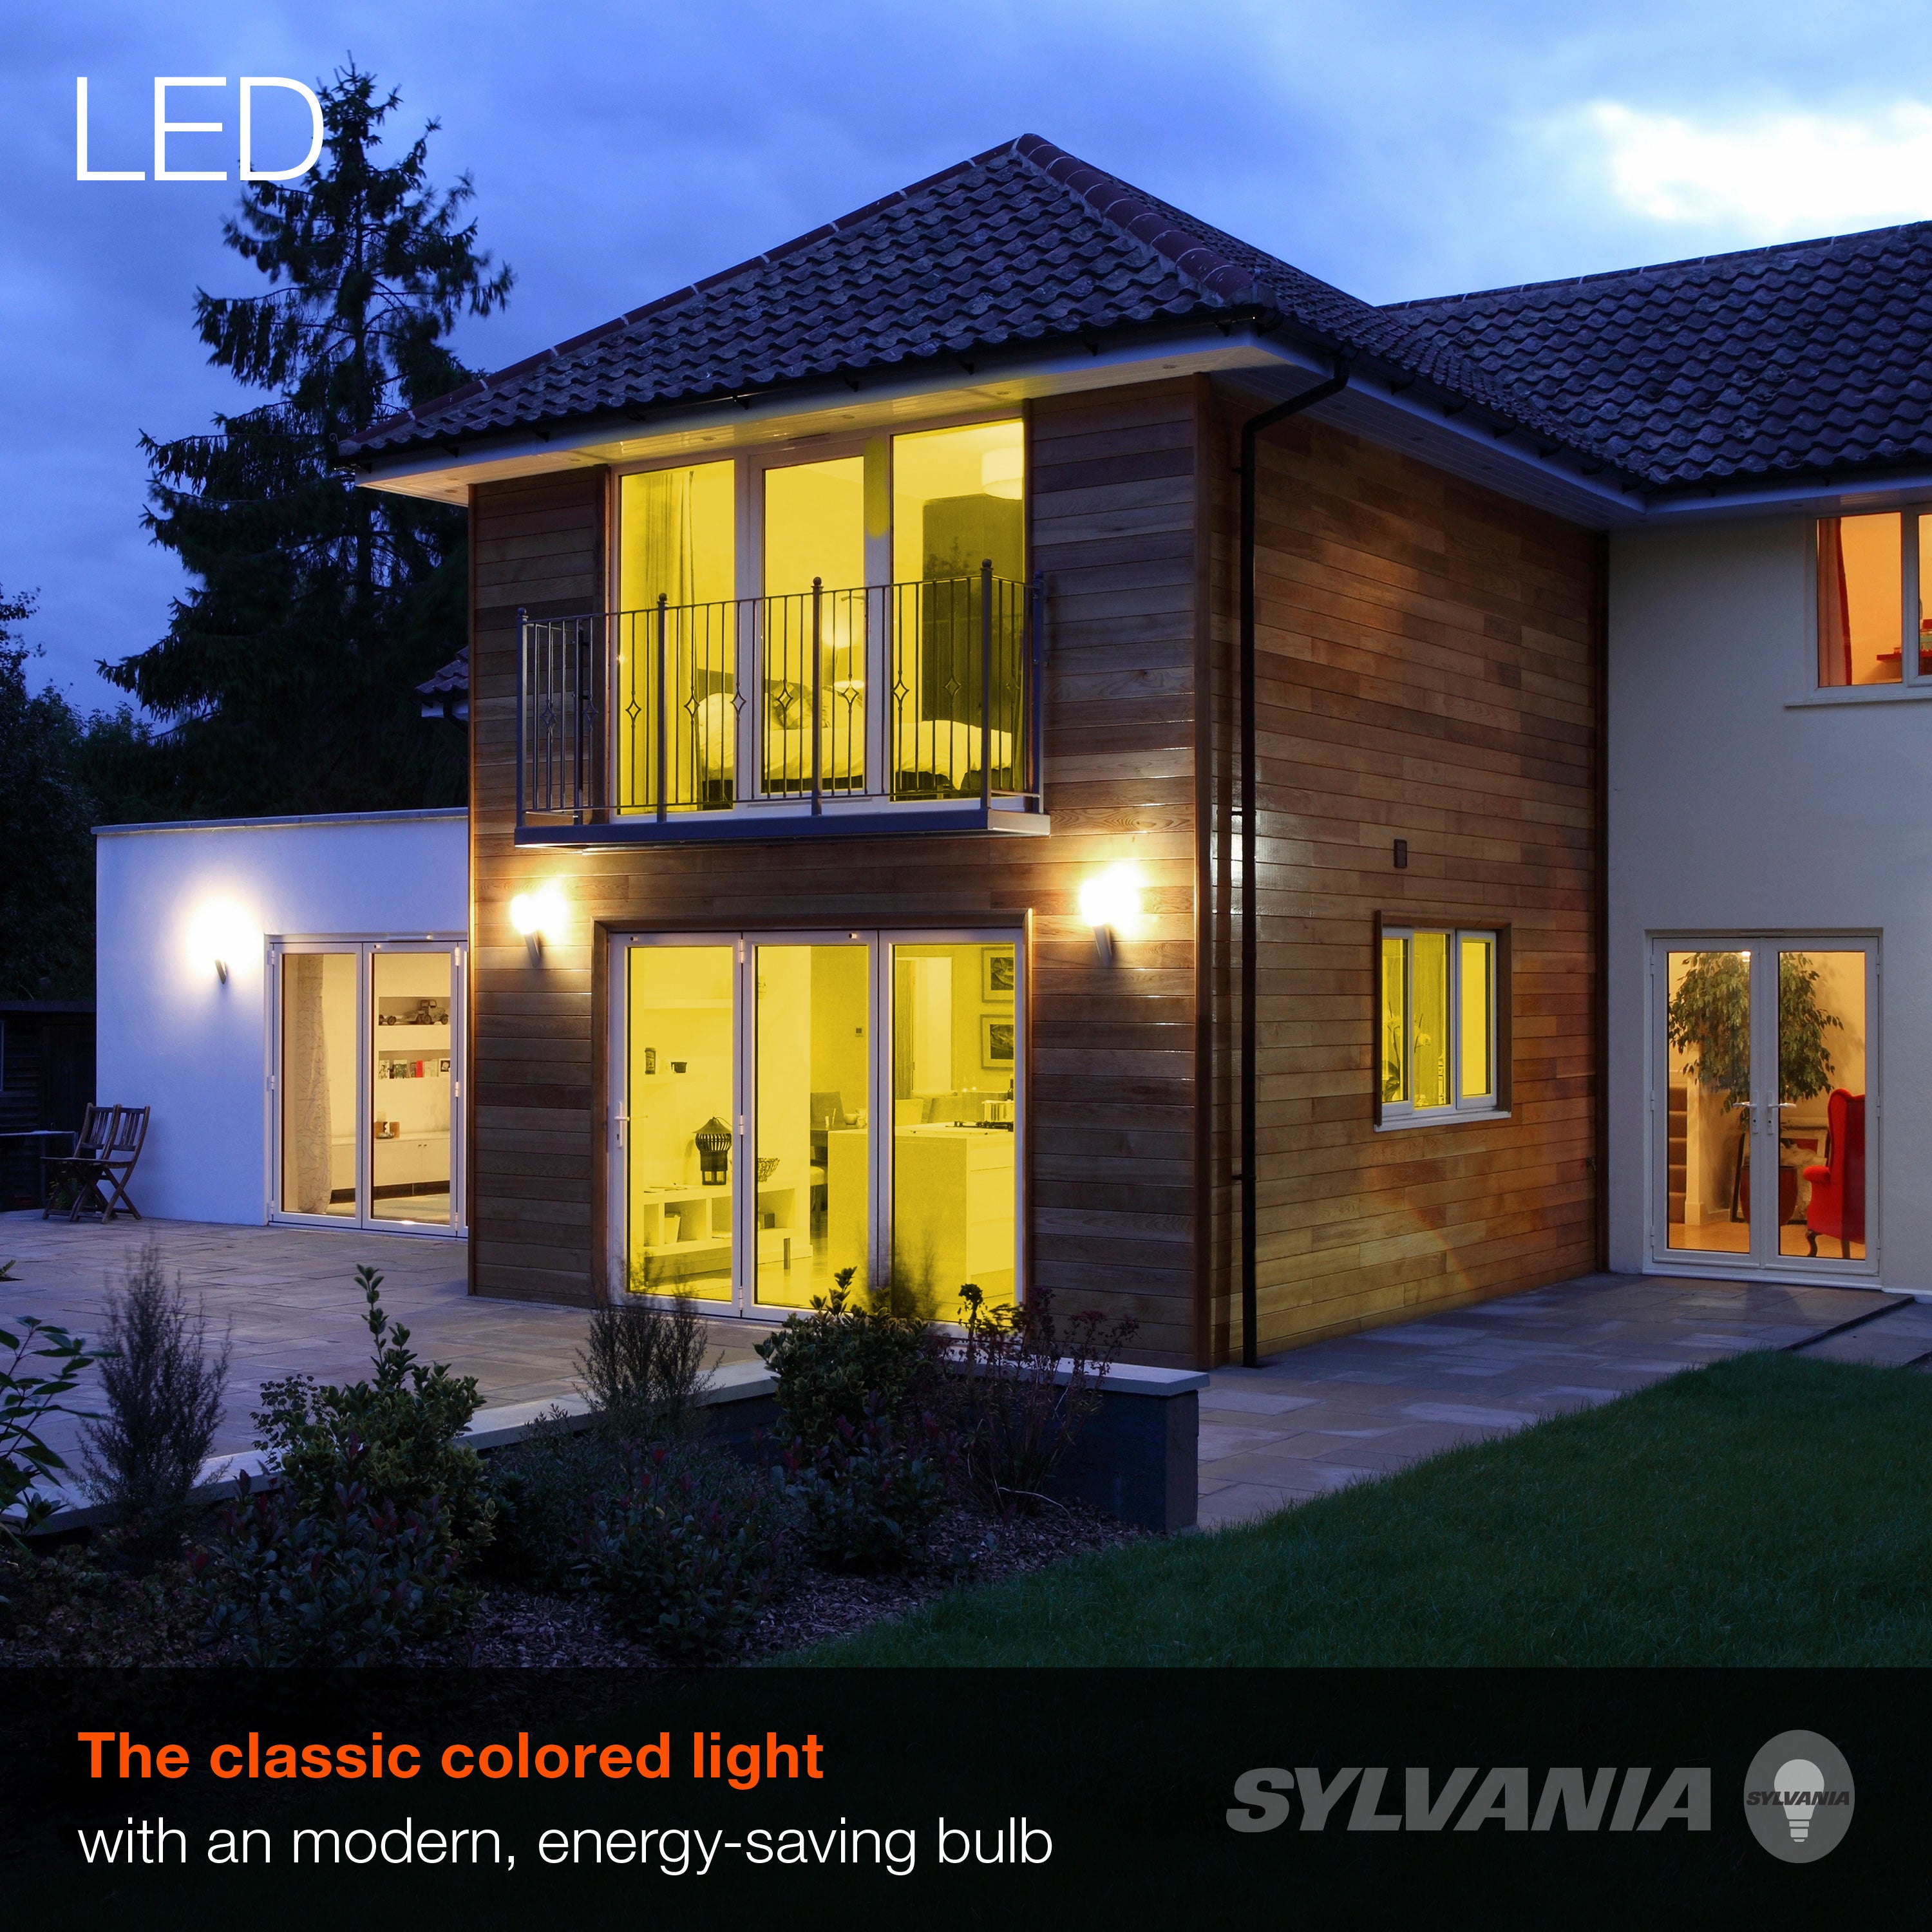 SYLVANIA LED Yellow Glass Filament A19 Light Bulb,  40W = 4.5W, Dimmable, E26 Medium Base - 6 Pk